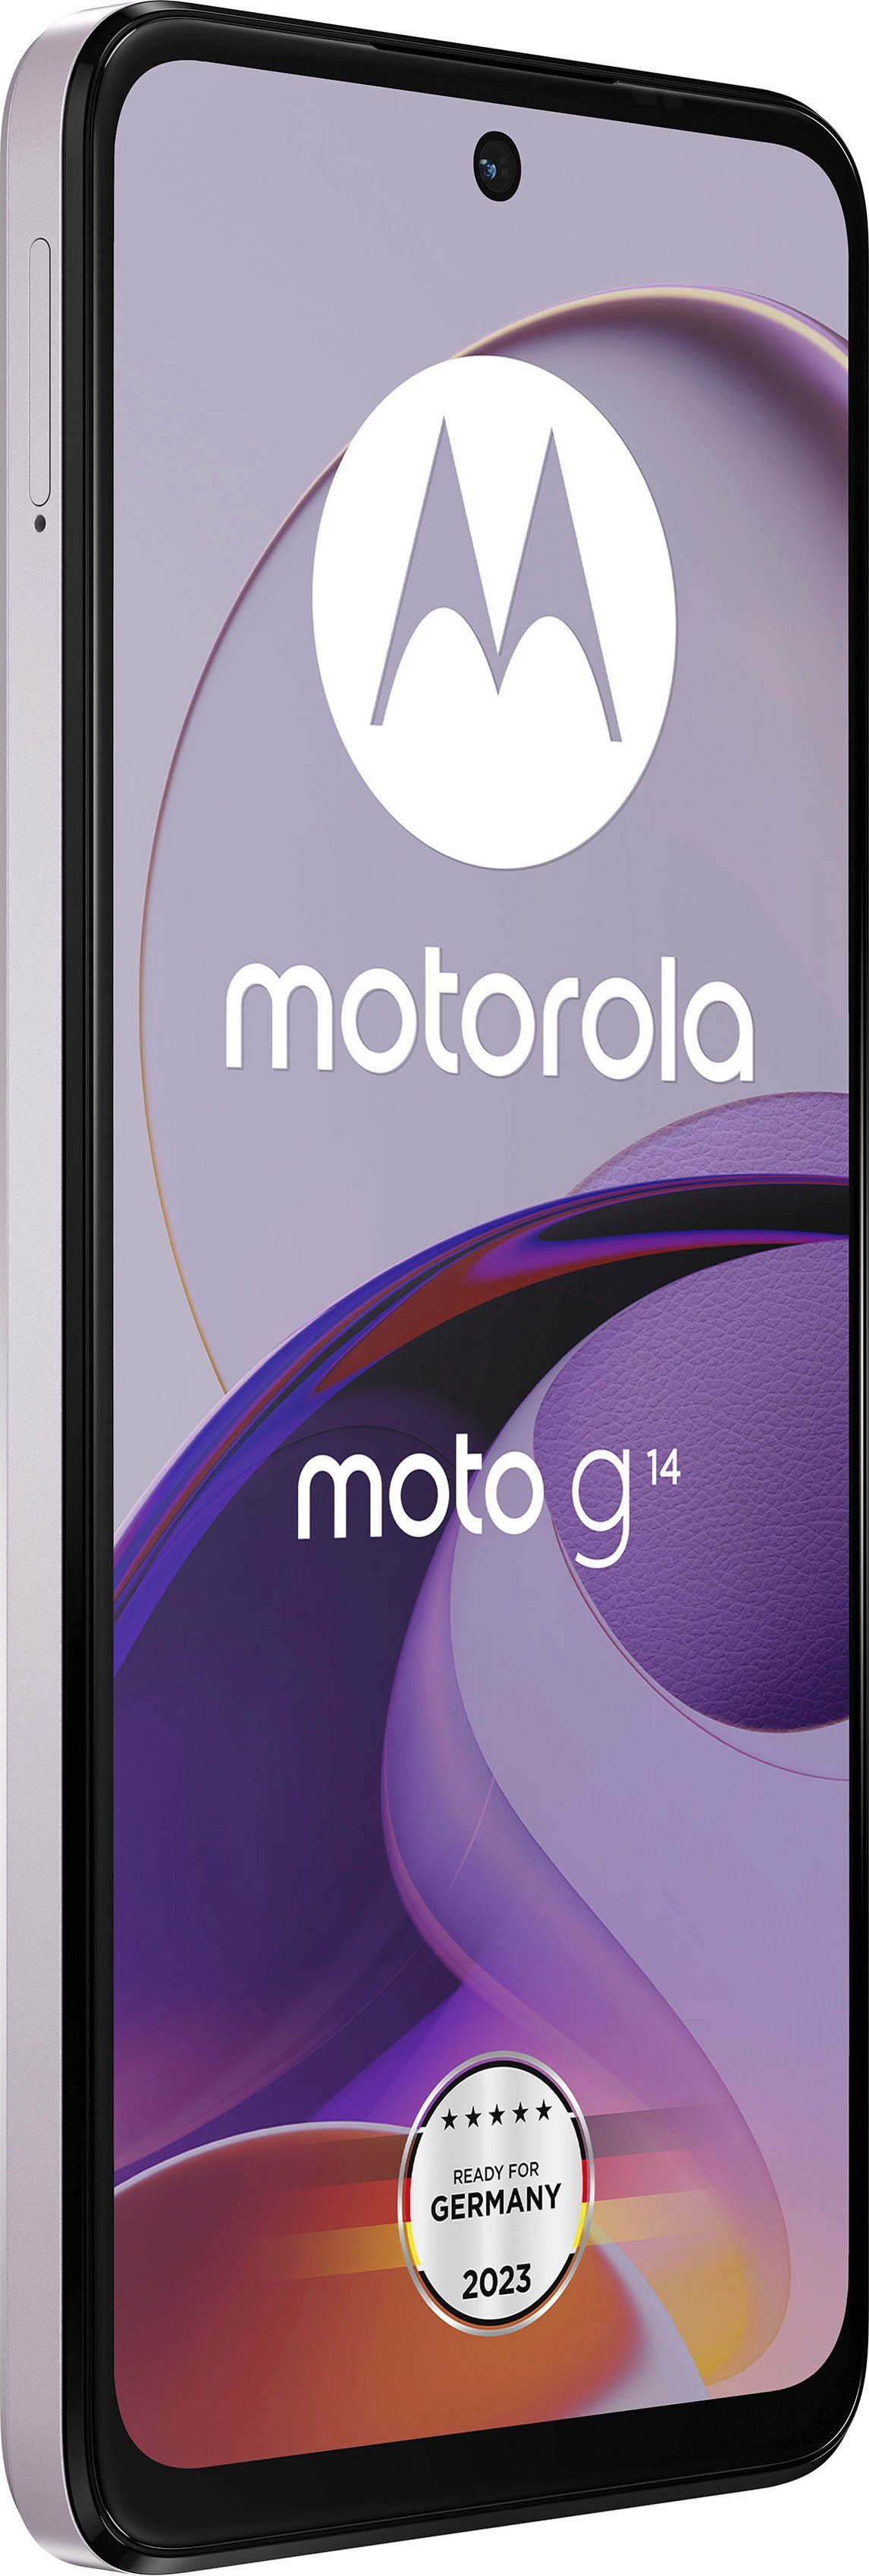 (16,51 Motorola Lilac cm/6,5 Pale 50 Zoll, Smartphone g14 Kamera) GB moto MP 128 Speicherplatz,